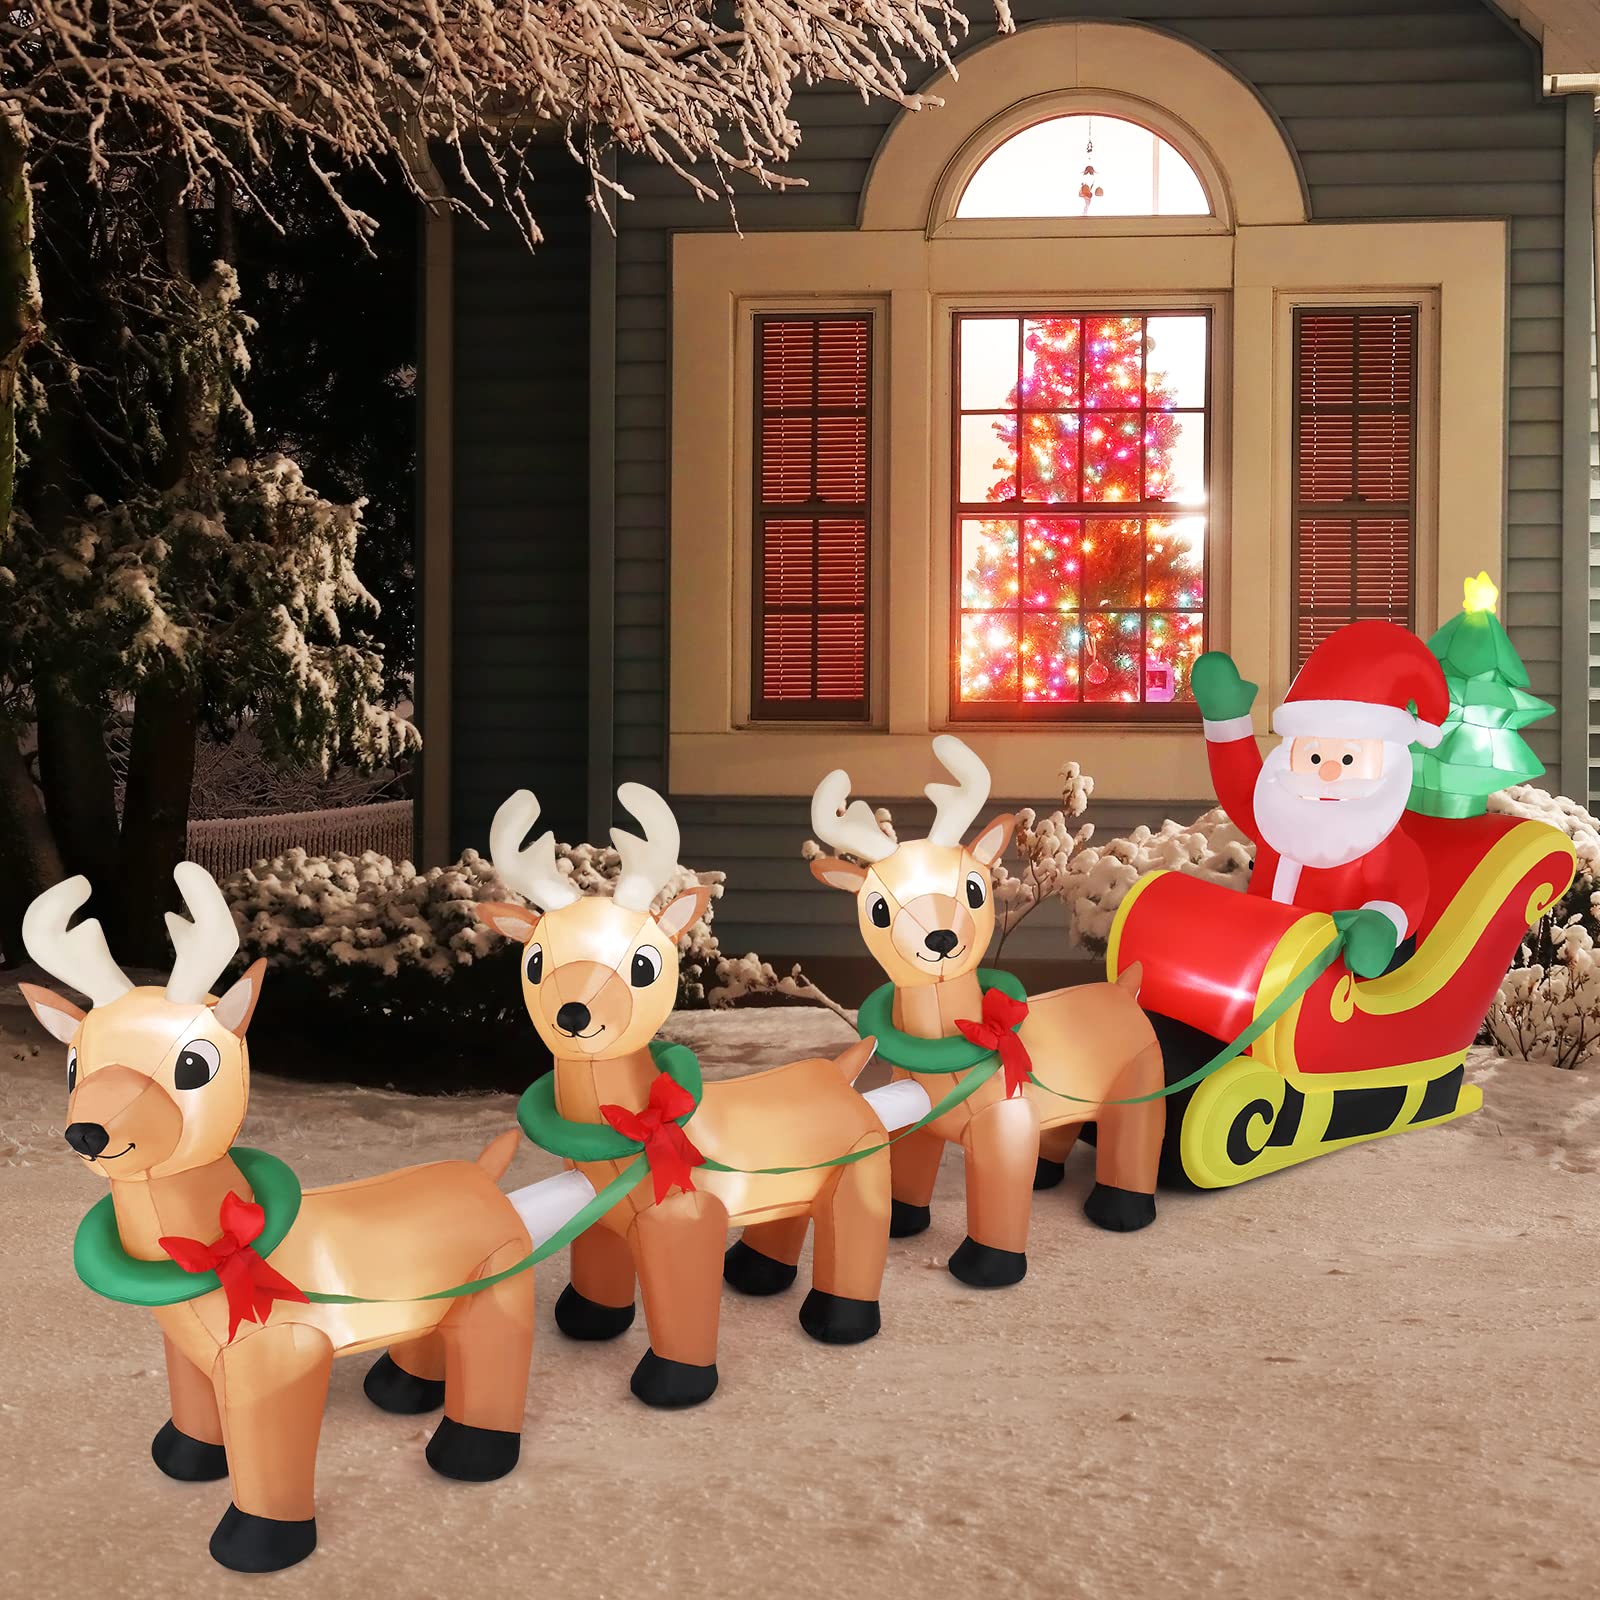 VINGLI 7/10 FT Long Inflatable Santa Claus on Sleigh With 2/3 Reindeer